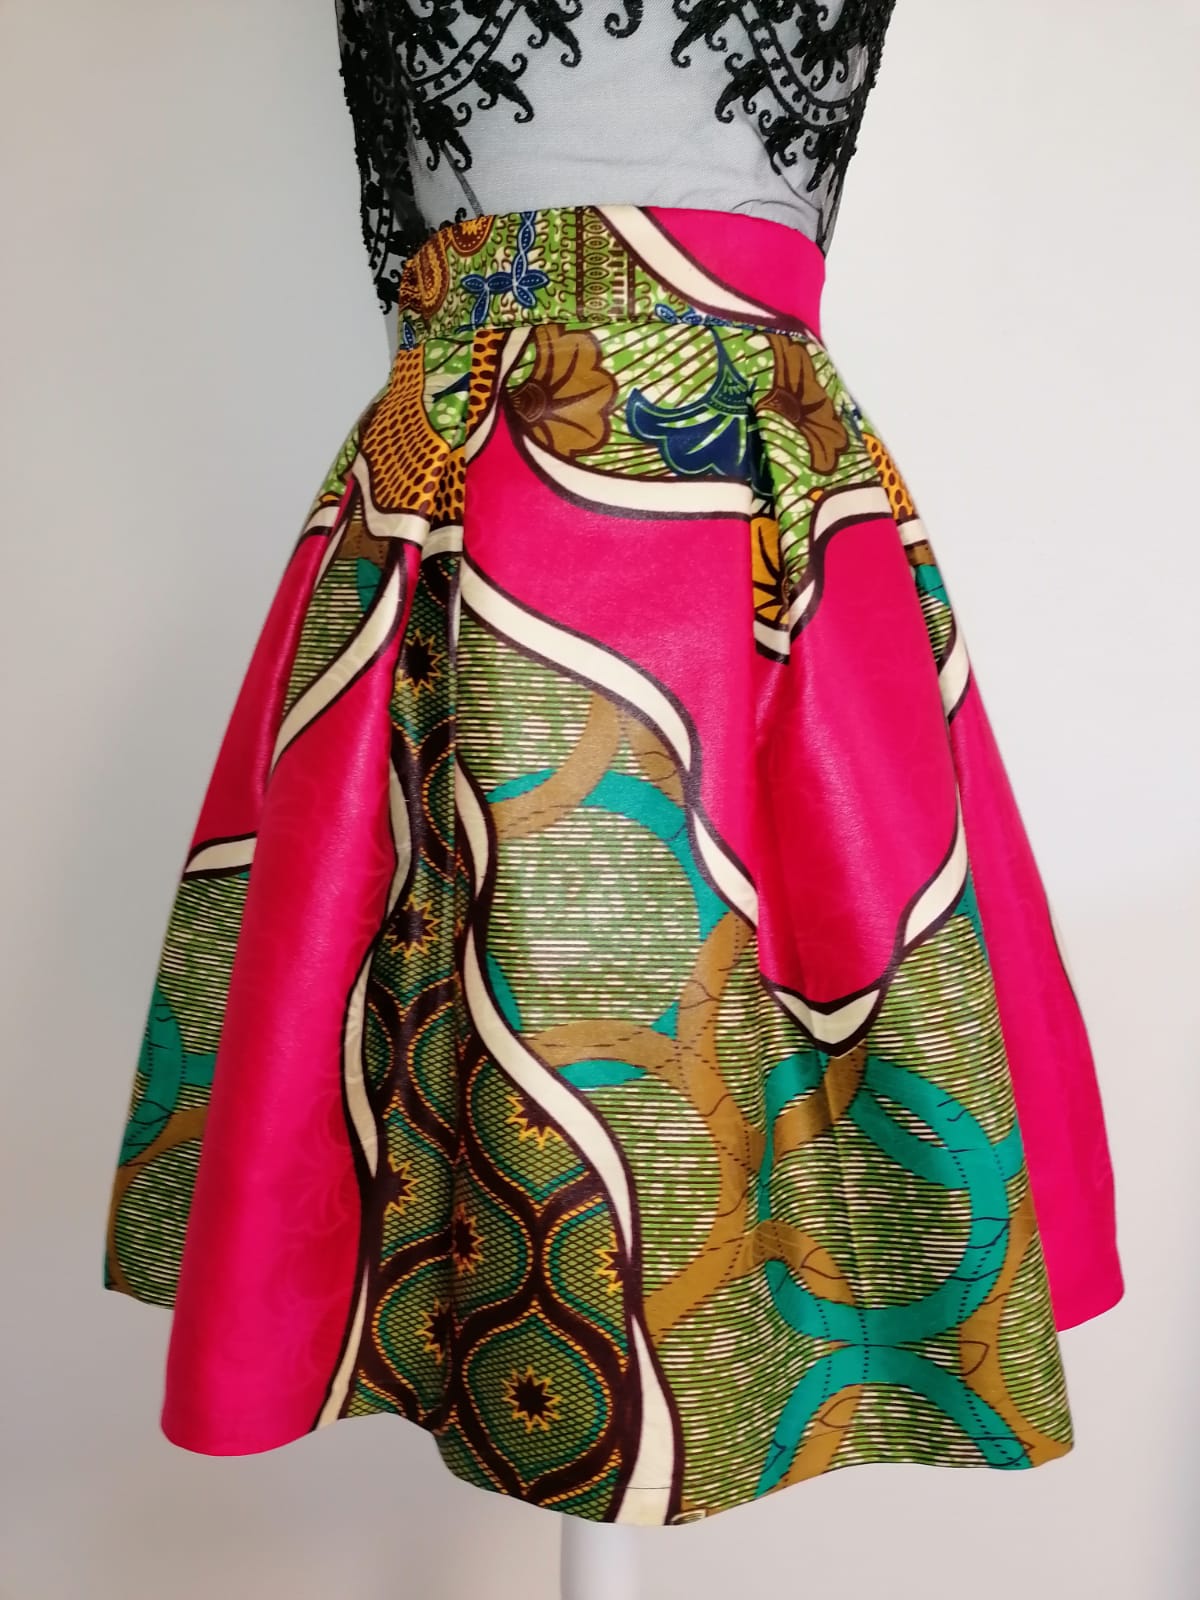 Africká sukně z brokatu / African skirt from bazin fabric